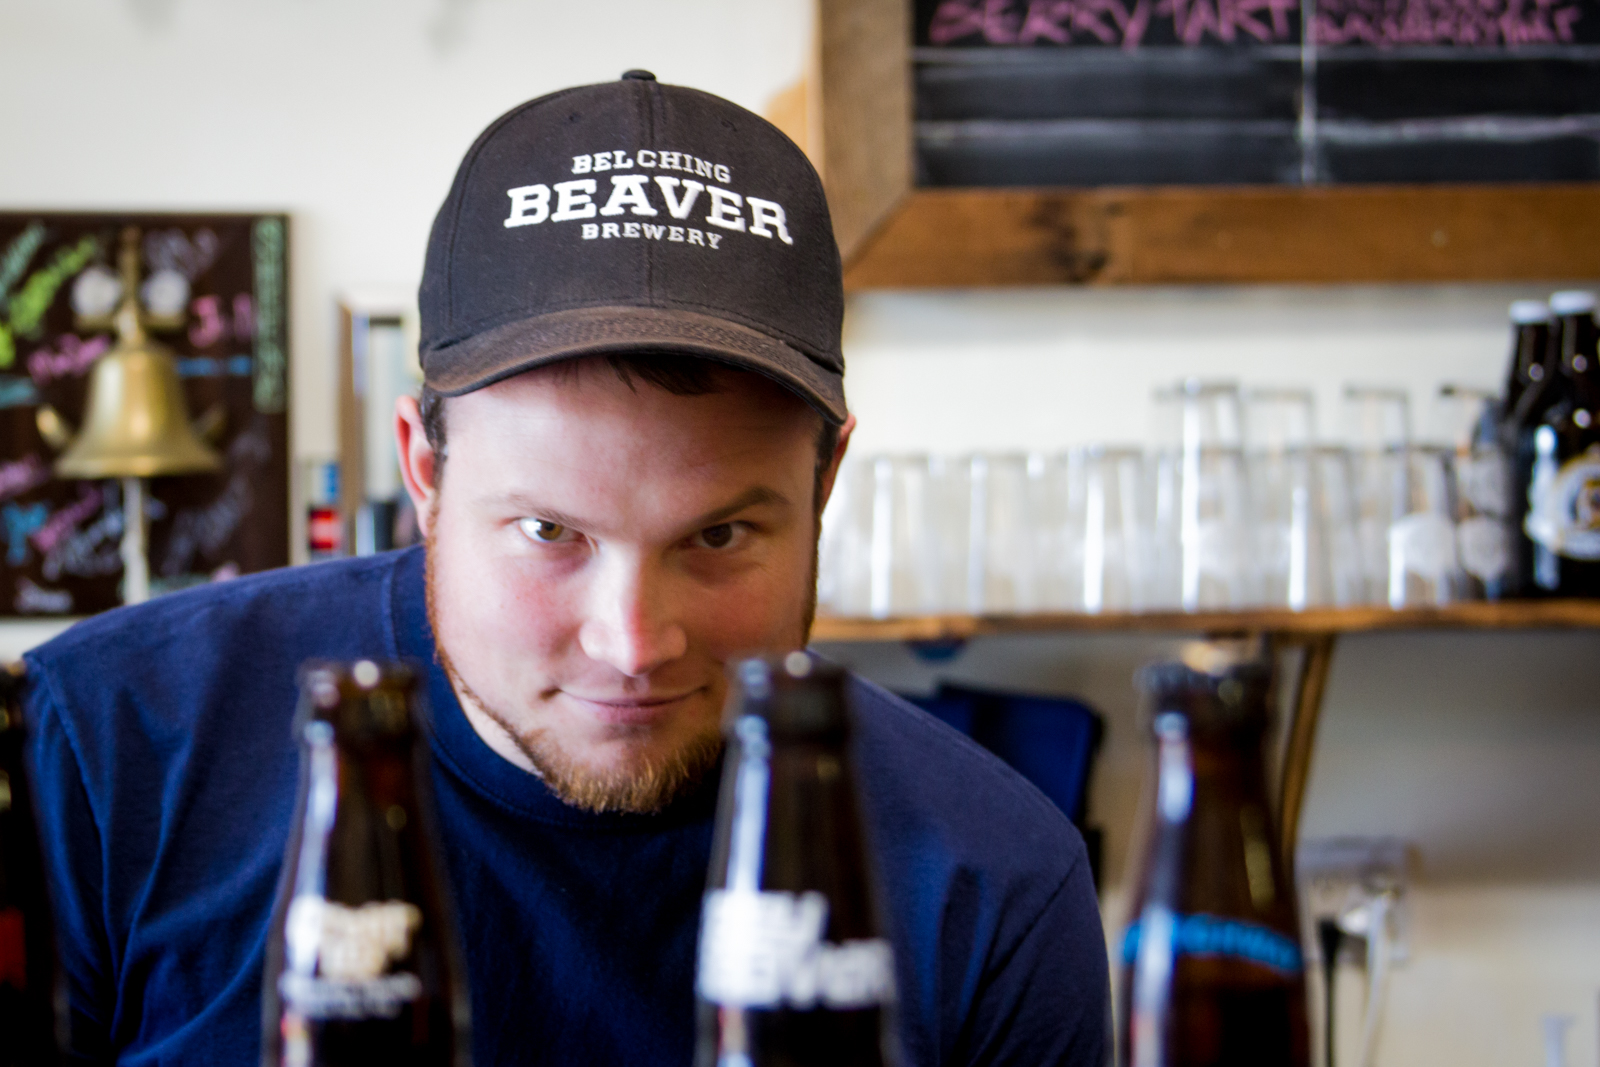 Sean Laidlaw, Brewer at Belching Beaver Brewery